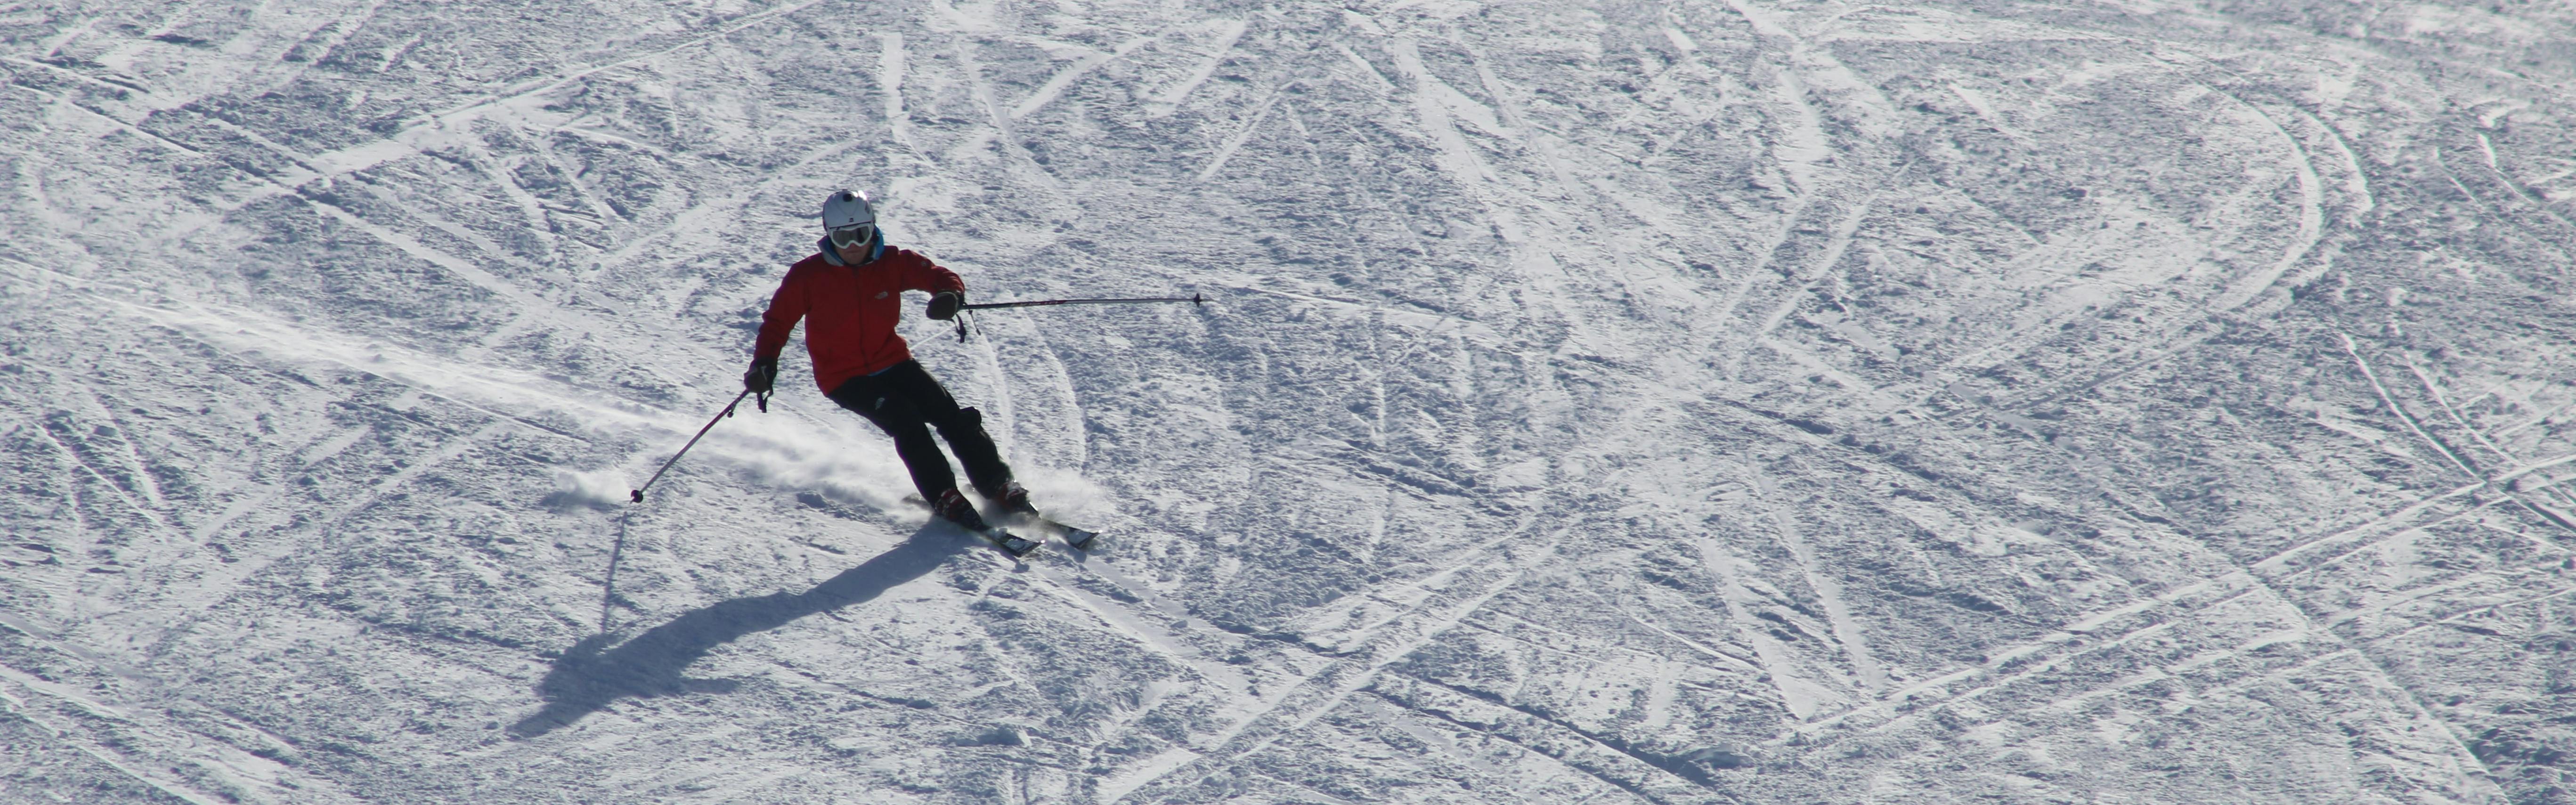 A skier carves a turn